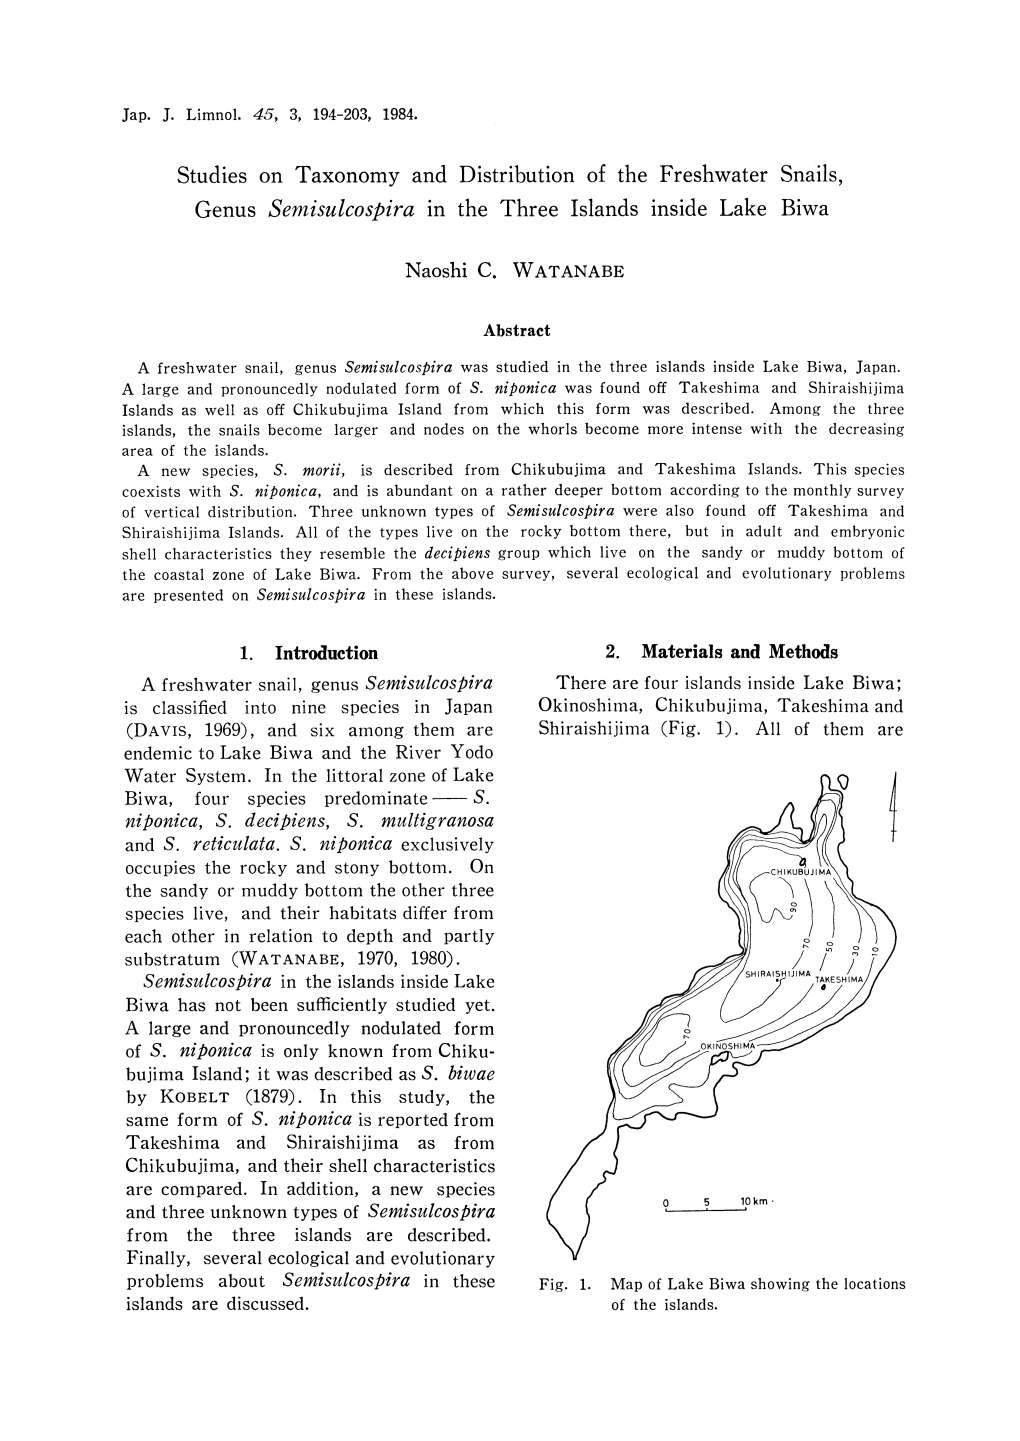 Studies on Taxonomy and Distribution of the Freshwater Snails, Genus Semisulcospira in the Three Islands Inside Lake Biwa